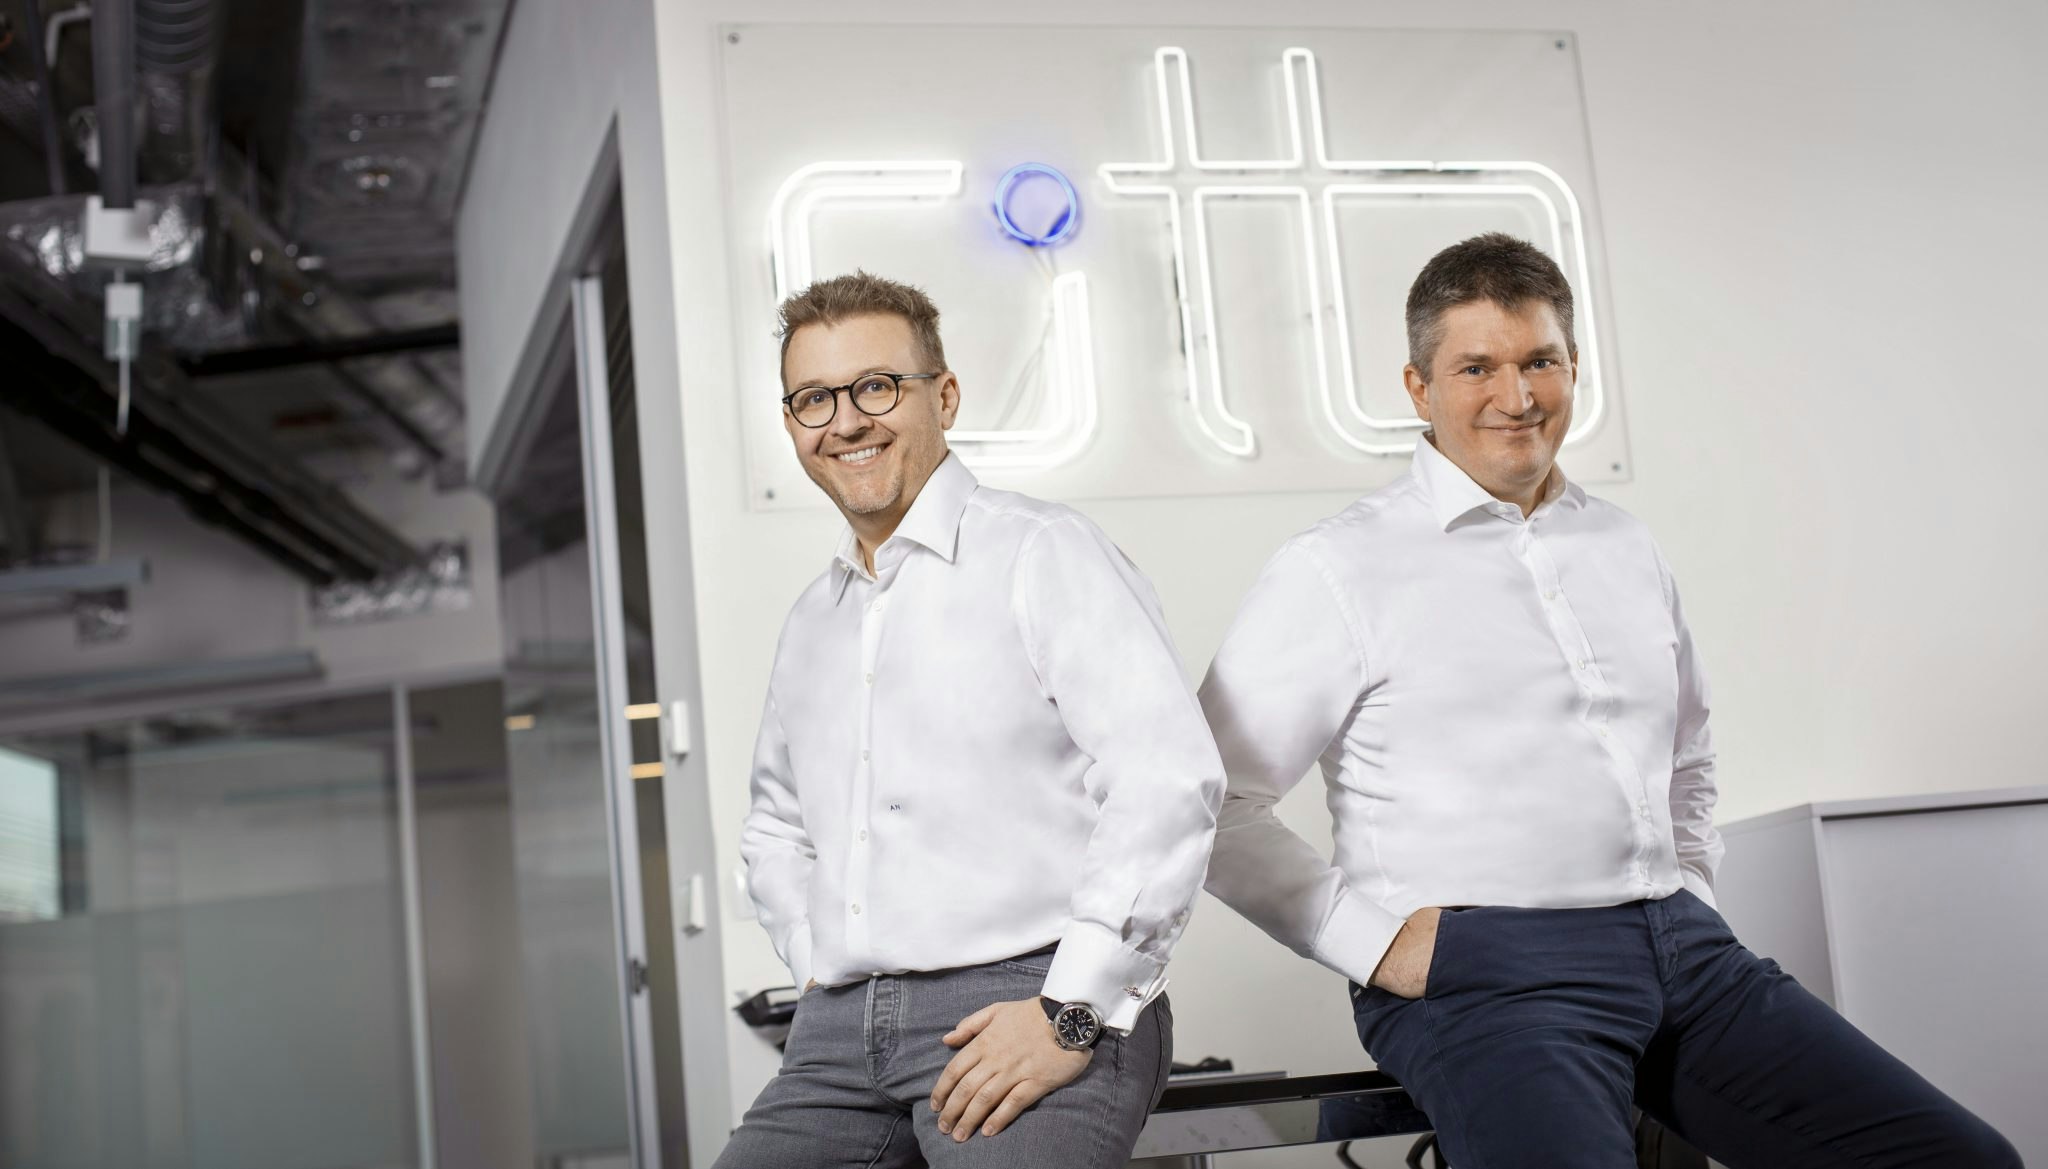 Adam Niewiński and Marcin Hejka of OTB Ventures